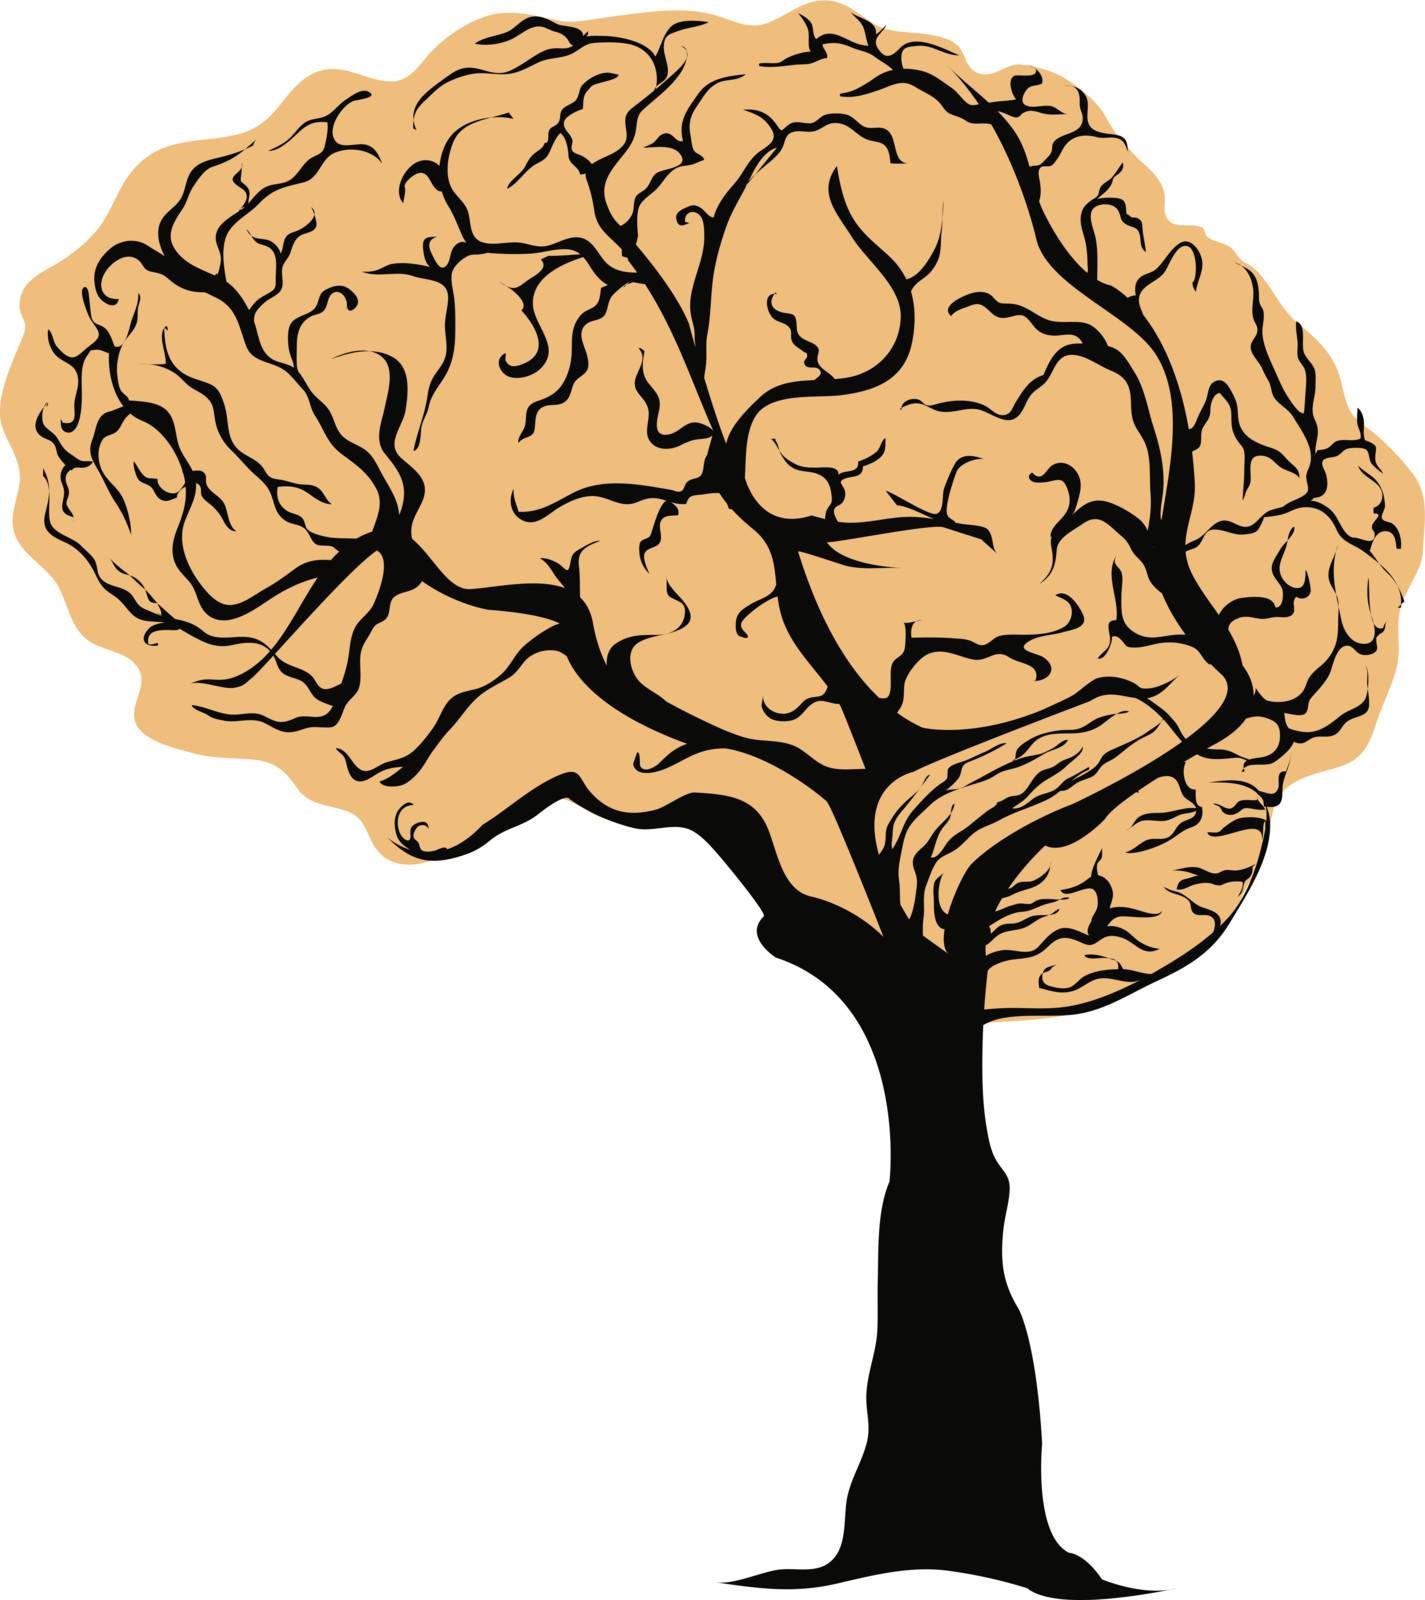 Brain Tree by ingaclemens